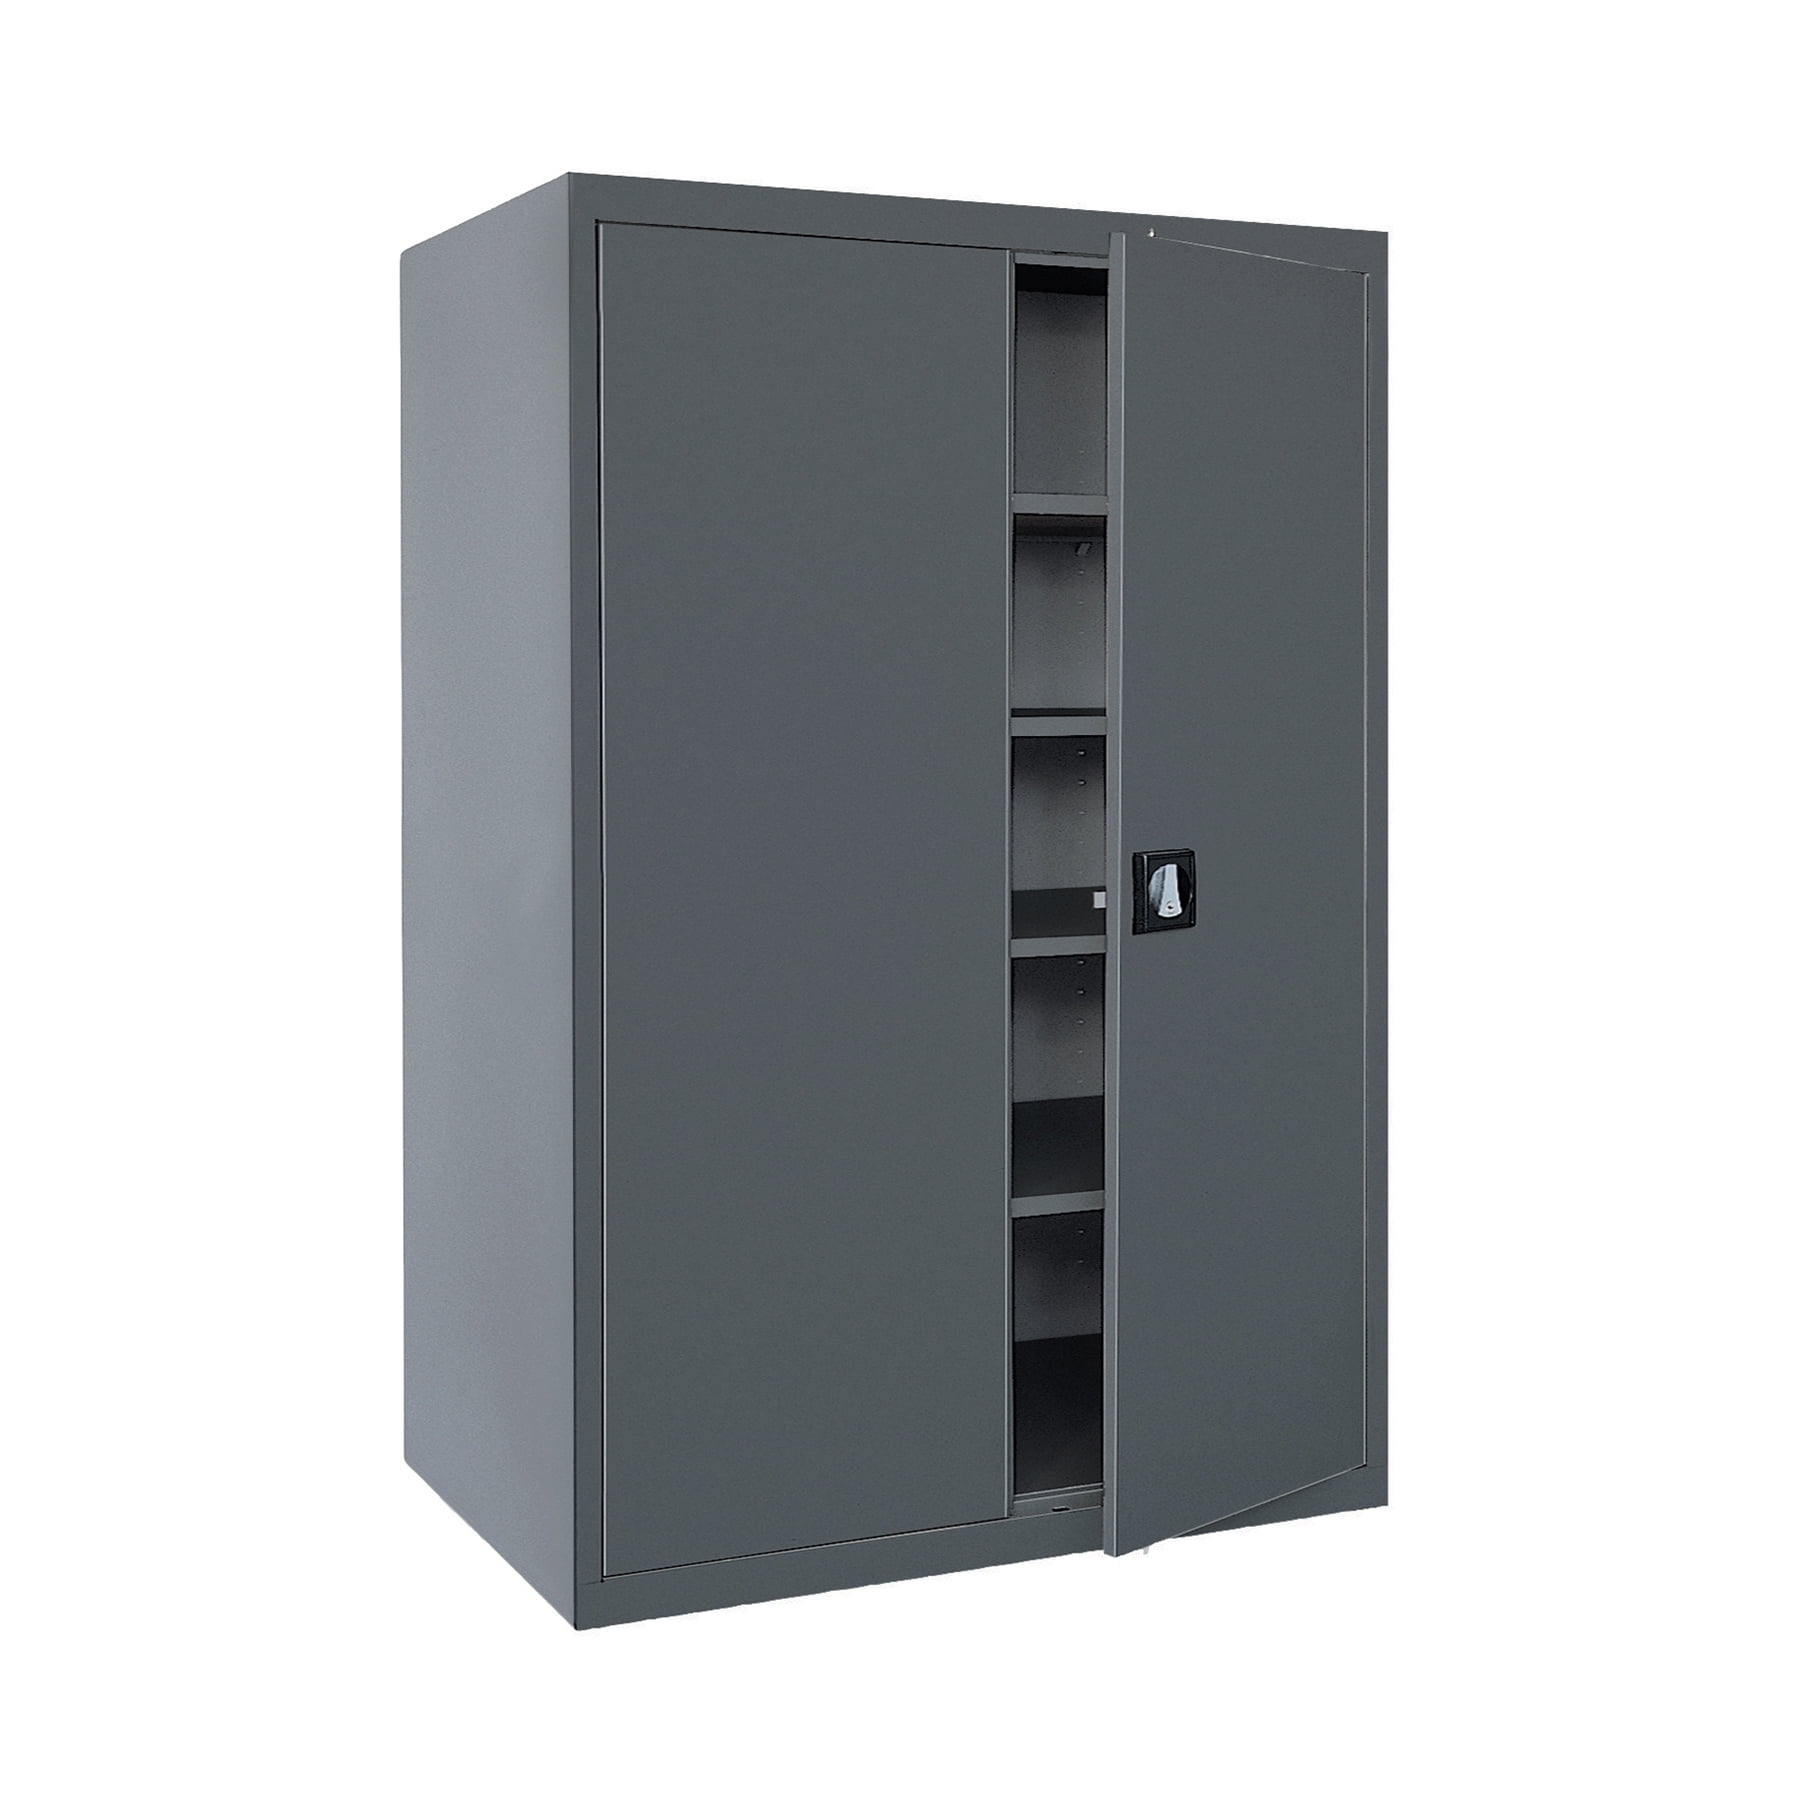 Lot 396 Black and Decker Storage Cabinet